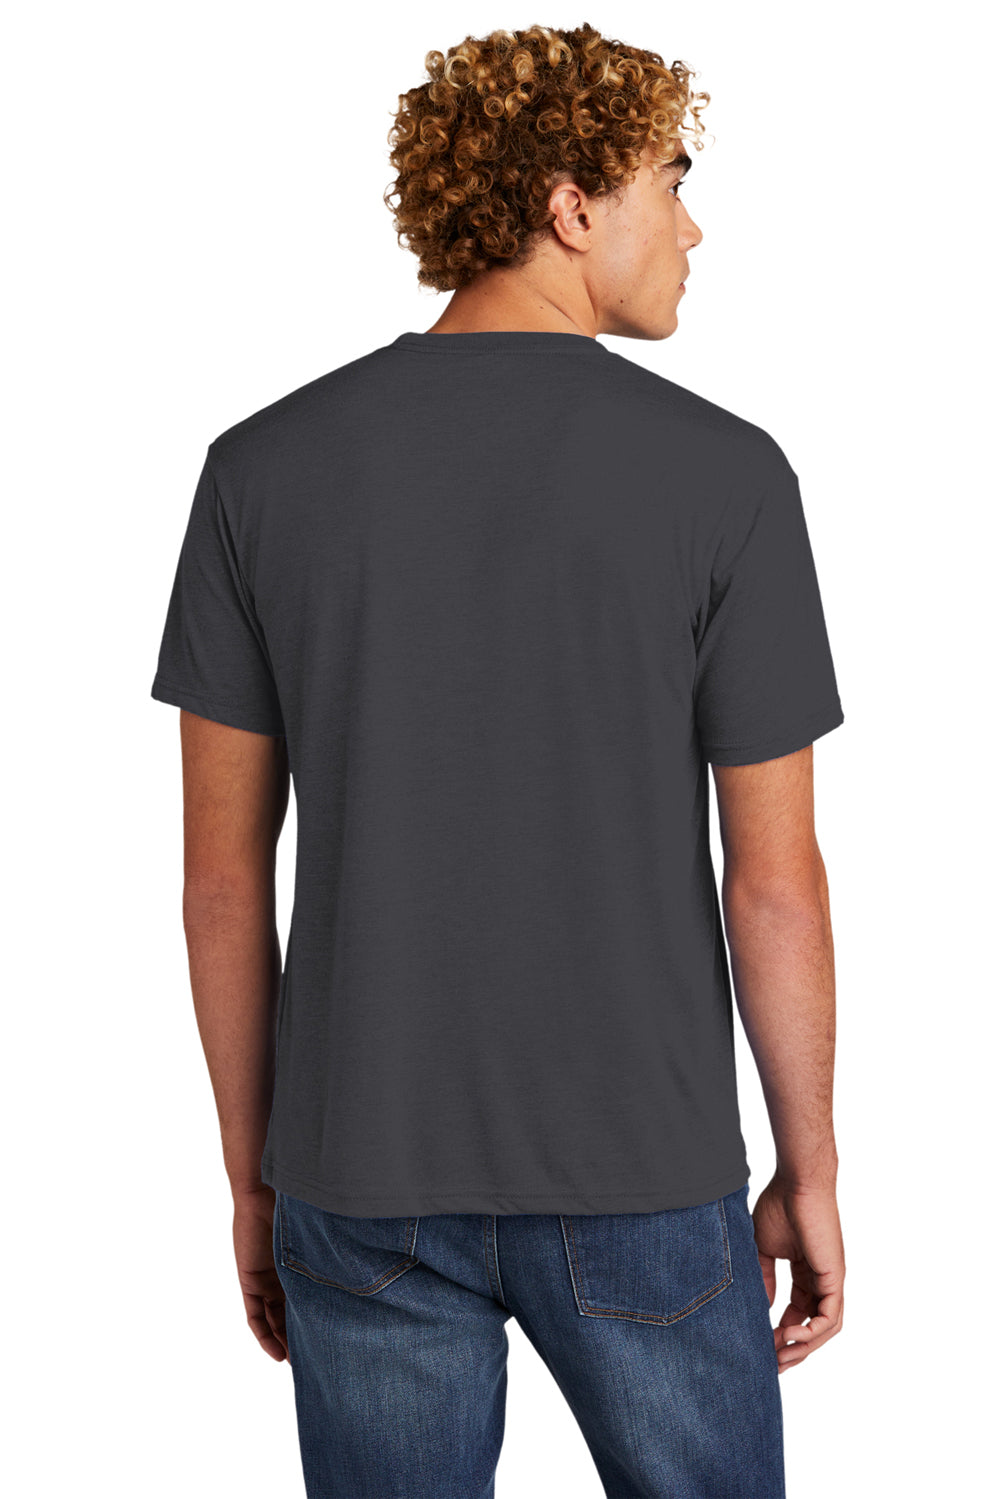 Next Level NL6010/6010 Mens Jersey Short Sleeve Crewneck T-Shirt Graphite Grey Back